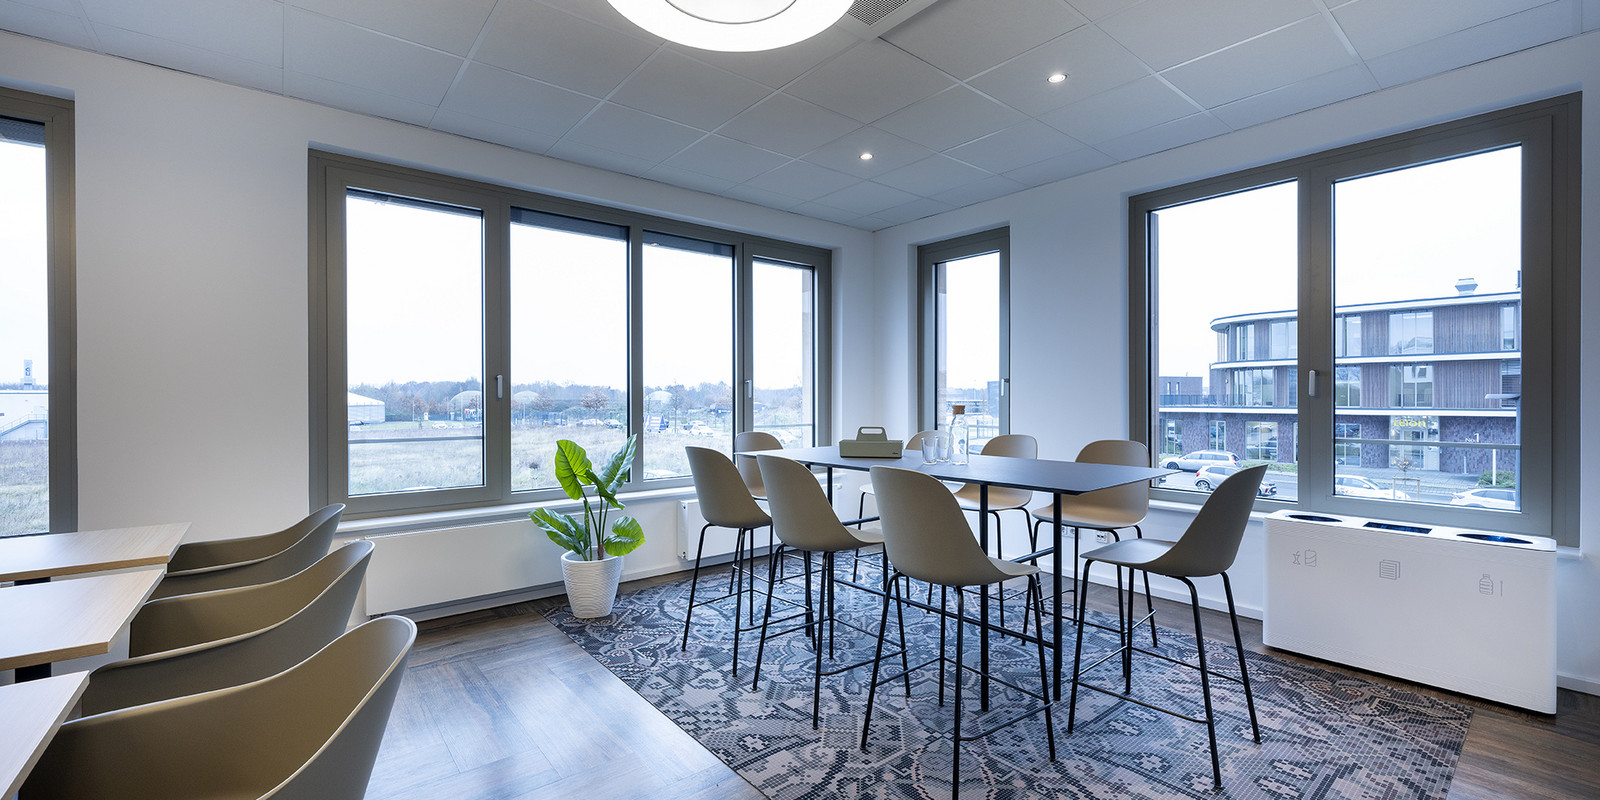 Innovative Umgestaltung: SVH Handels-GmbH gestaltet Arbeitsumgebung mit pro office Mönchengladbach neu Bild 3